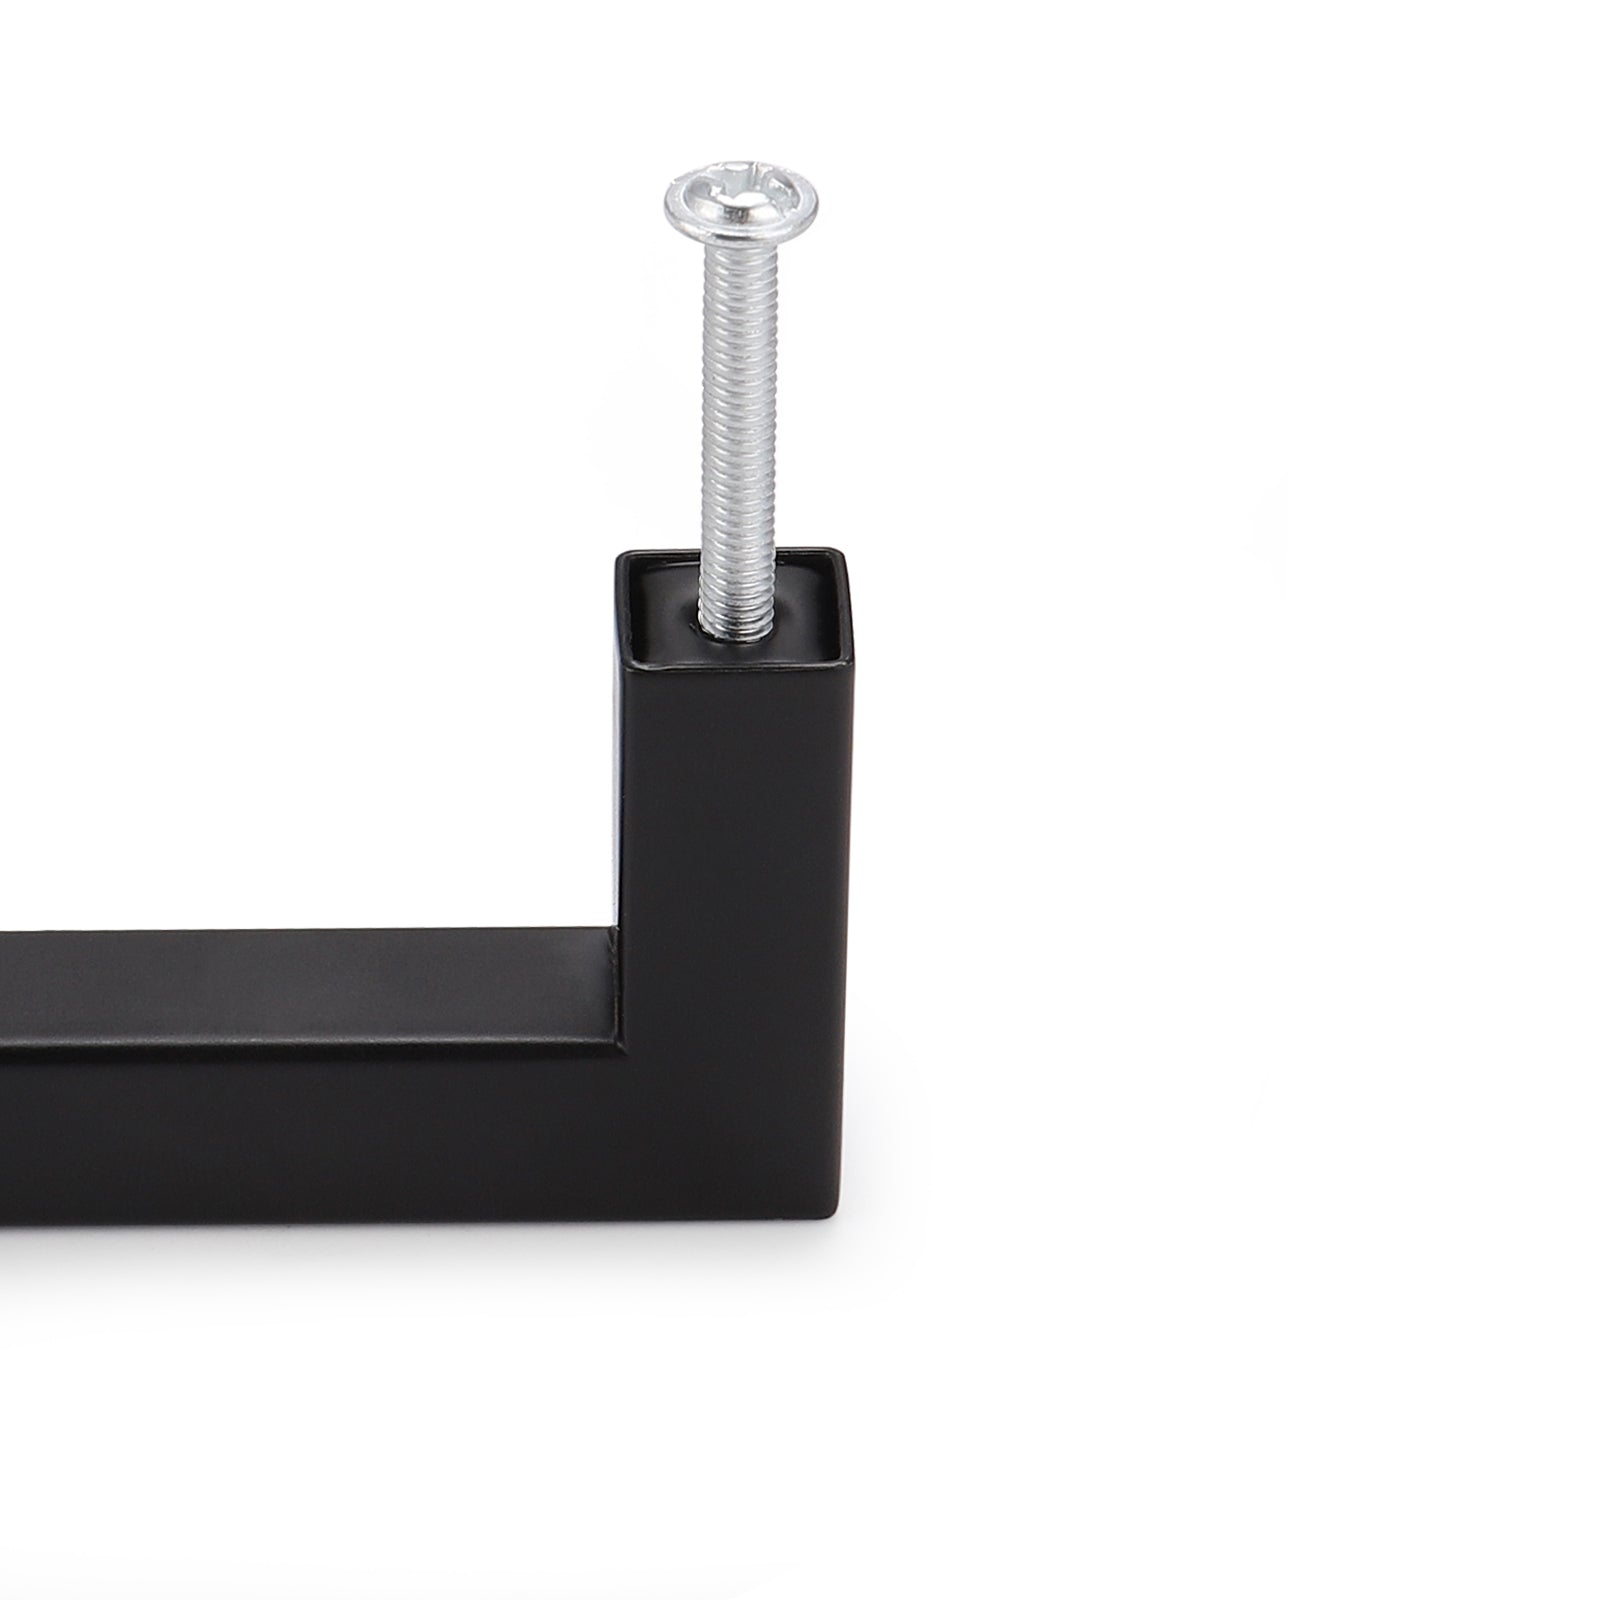 Probrico Black Cabinet Handles Modern Square Bar Drawer Pull 2-12 inch Hole Centers PDDJS12HBK 100 Packs